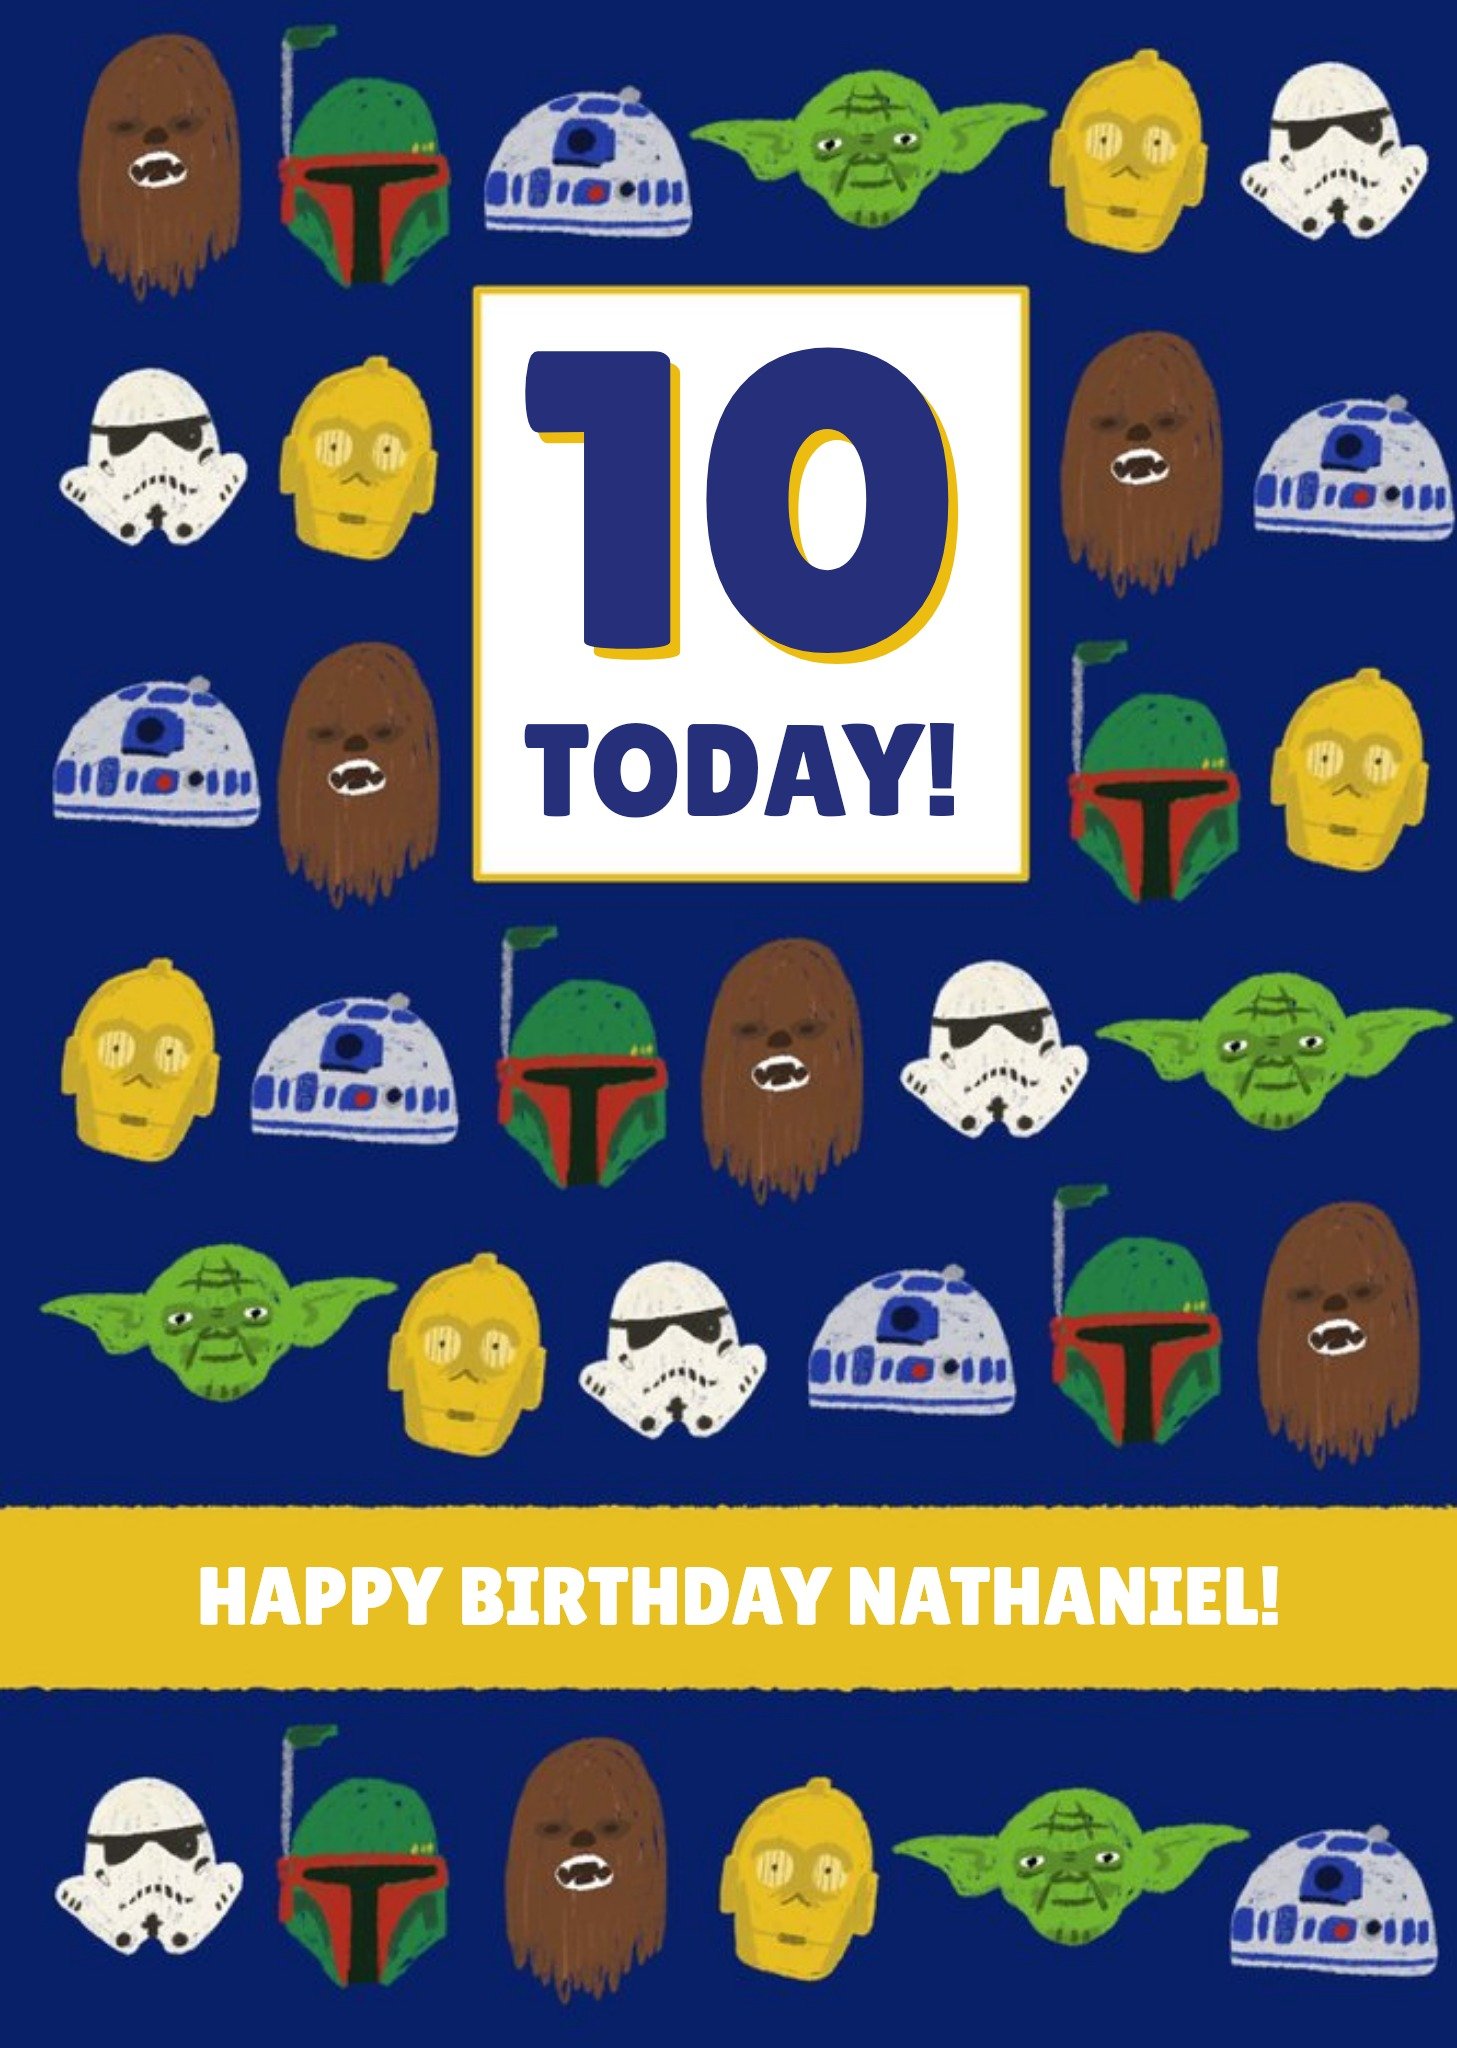 Disney Star Wars Boba Fett Chewbacca Yoda R2D2 Stormtrooper Kids 10 Today Birthday Card Ecard